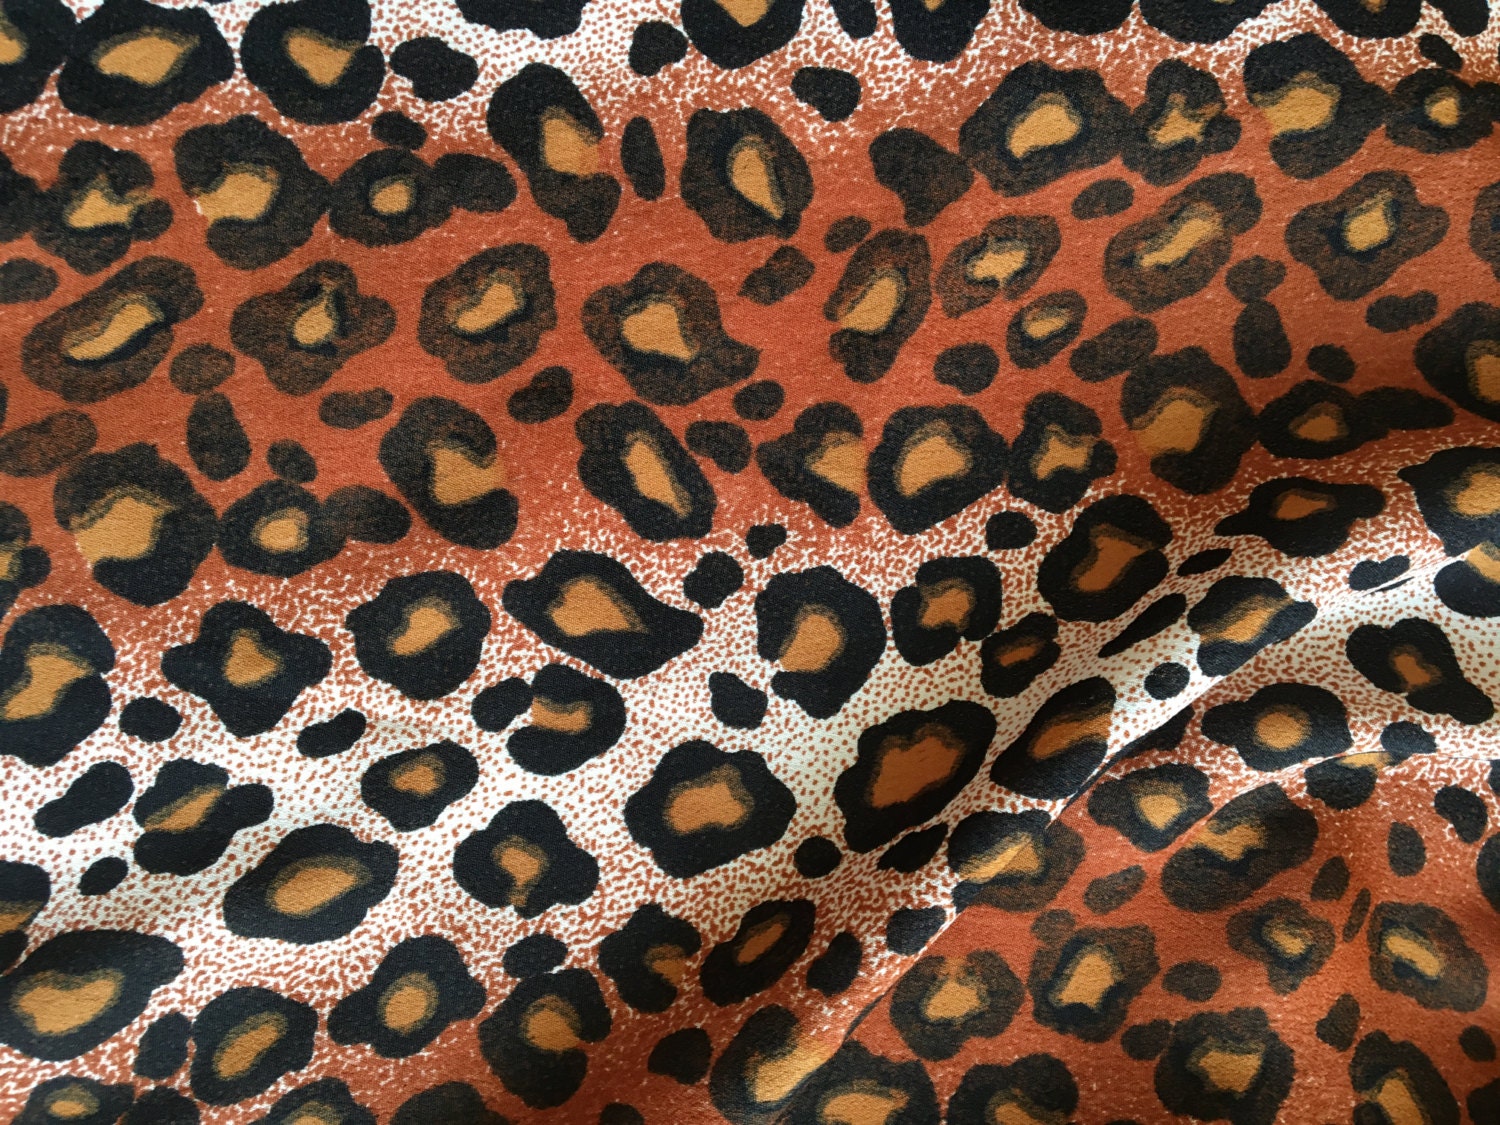 Tiger Animal Print Rayon Crepe Fabric by the Yard Fabric